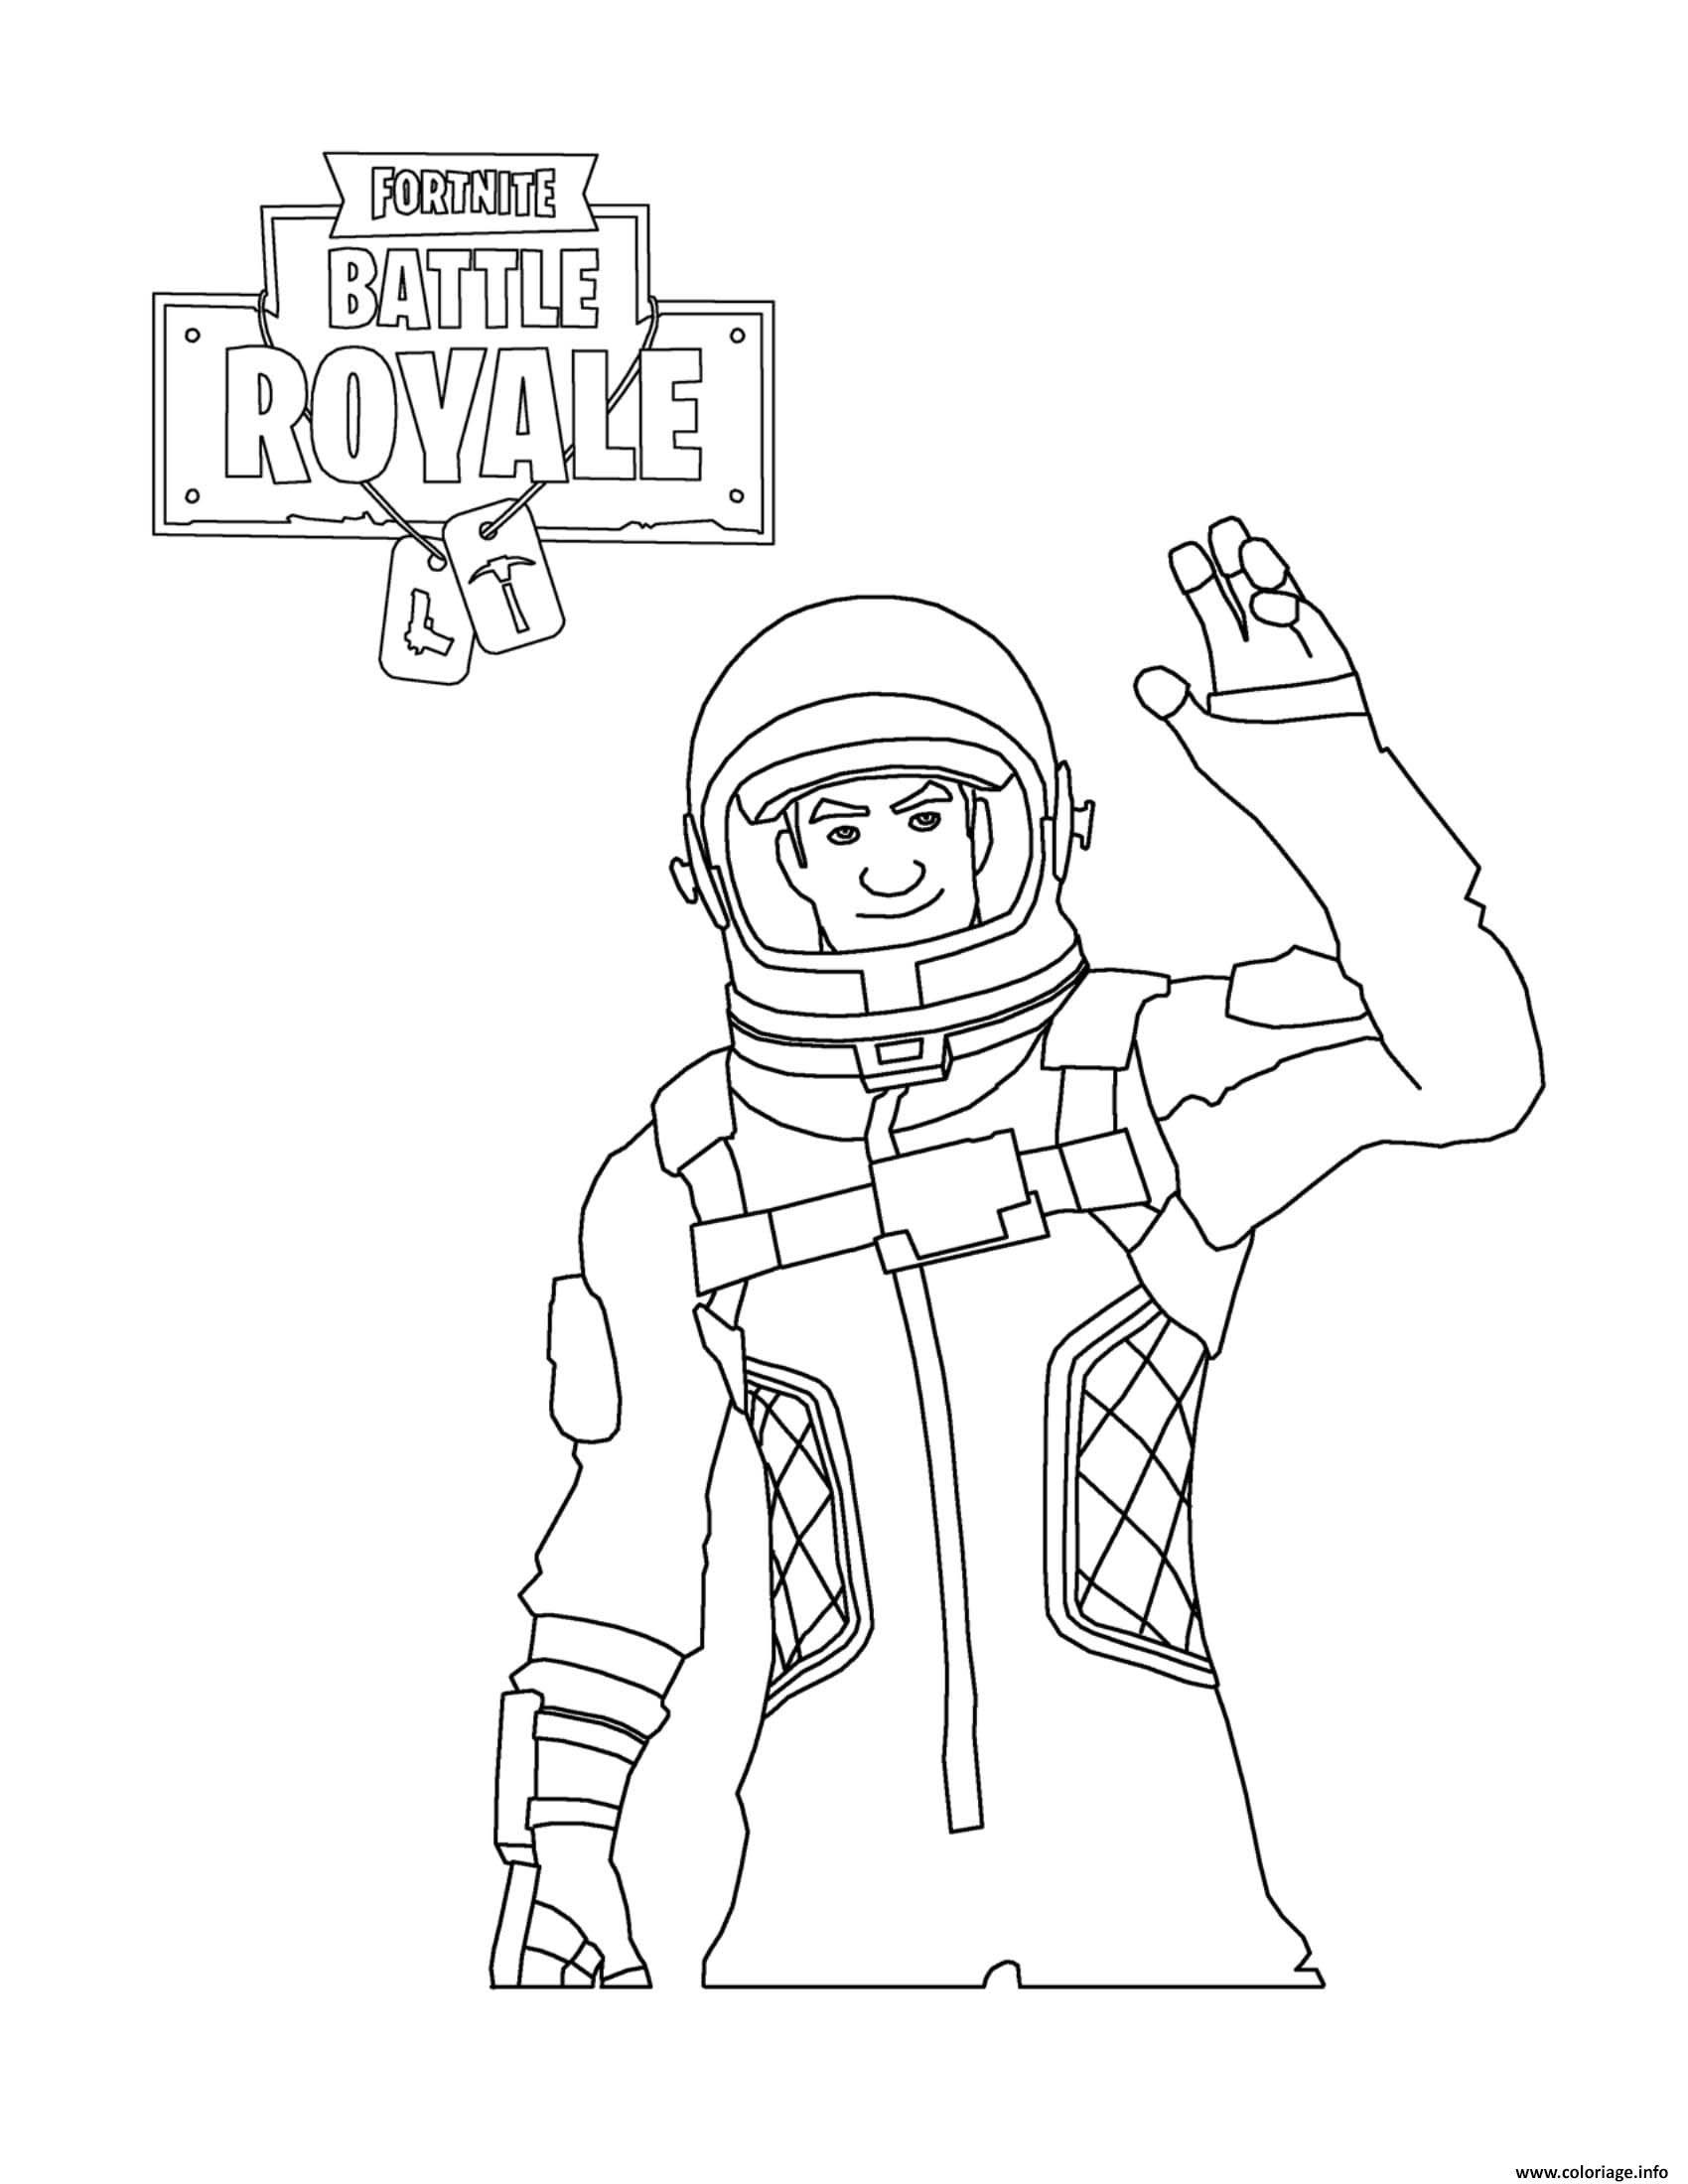 Coloring Fortnite Battle Royale Logo - Fortnite Battle Royale : Astronaut Battle Royale Kids